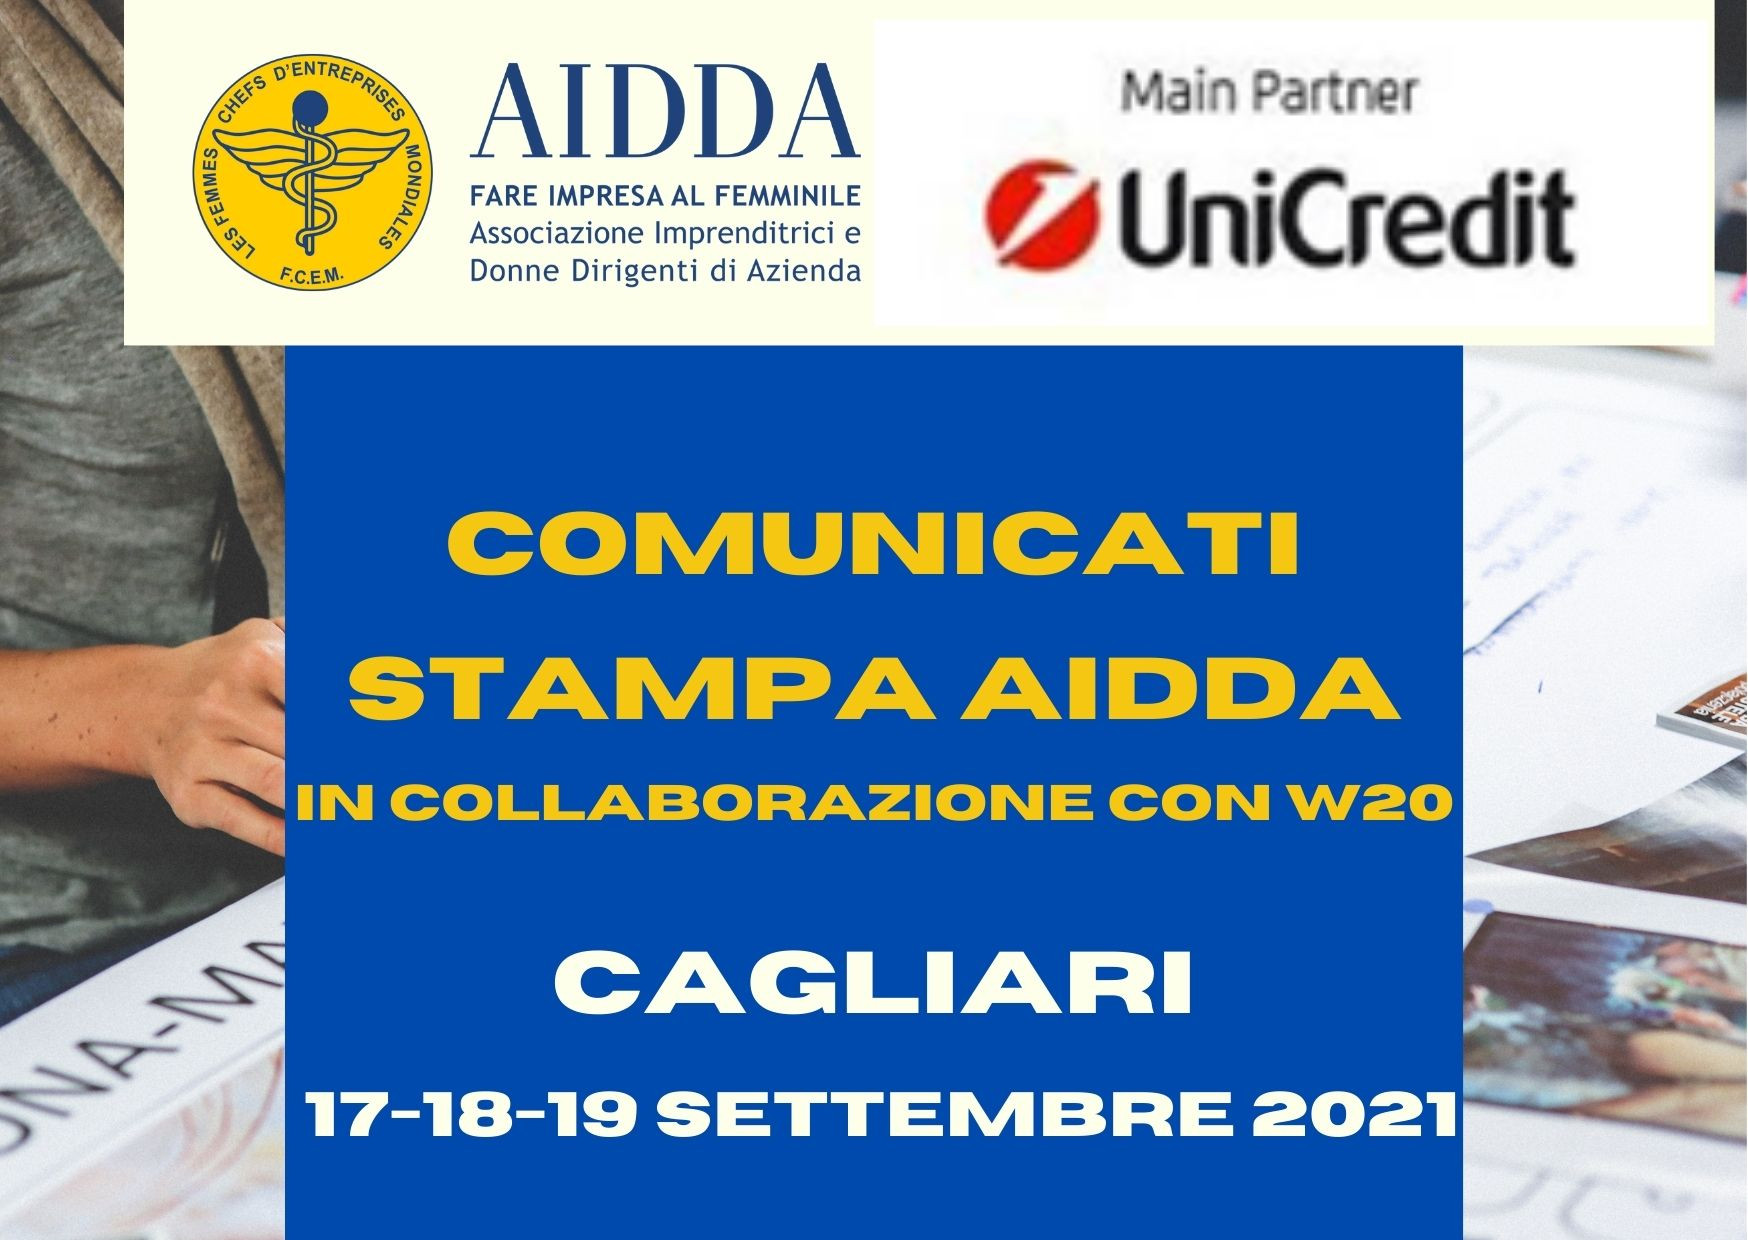 COMUNICATI STAMPA AIDDA Cagliari .jpg